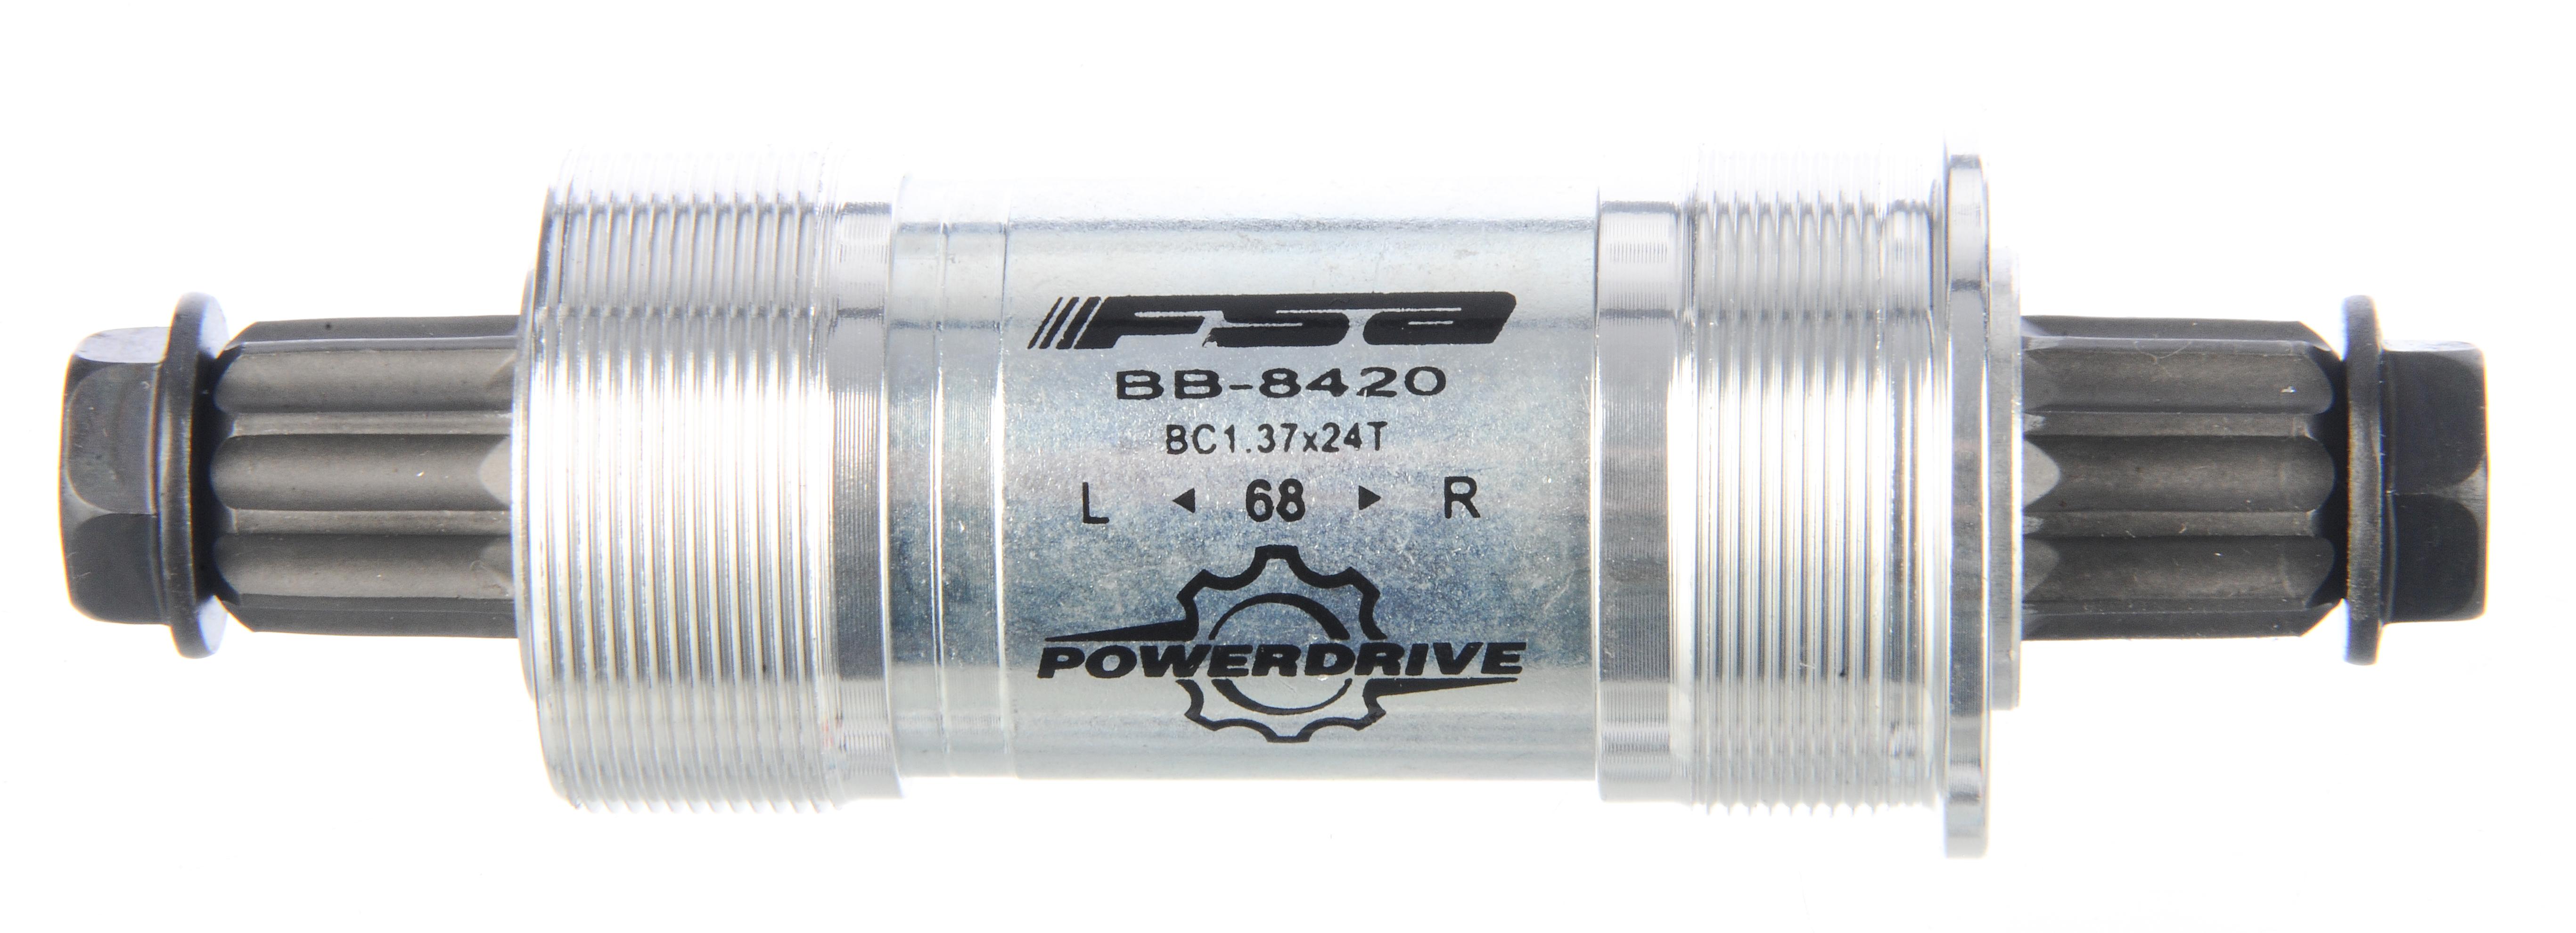 Image of FSA Power Drive Bottom Bracket (BB-8420), Silver